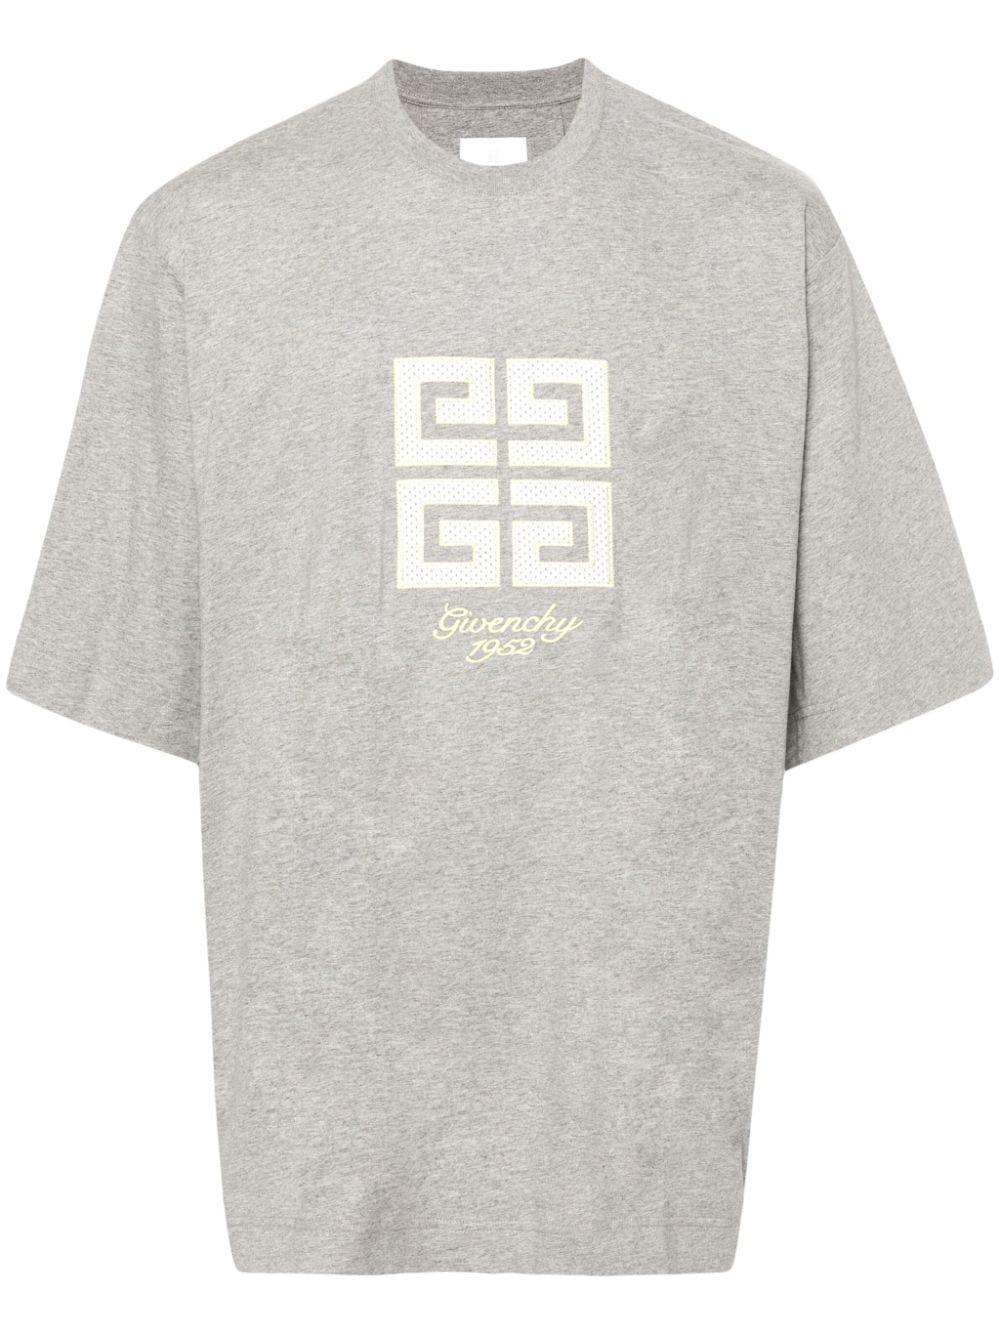 GIVENCHY Men's LGREYMLG T-Shirt - FW24 Collection